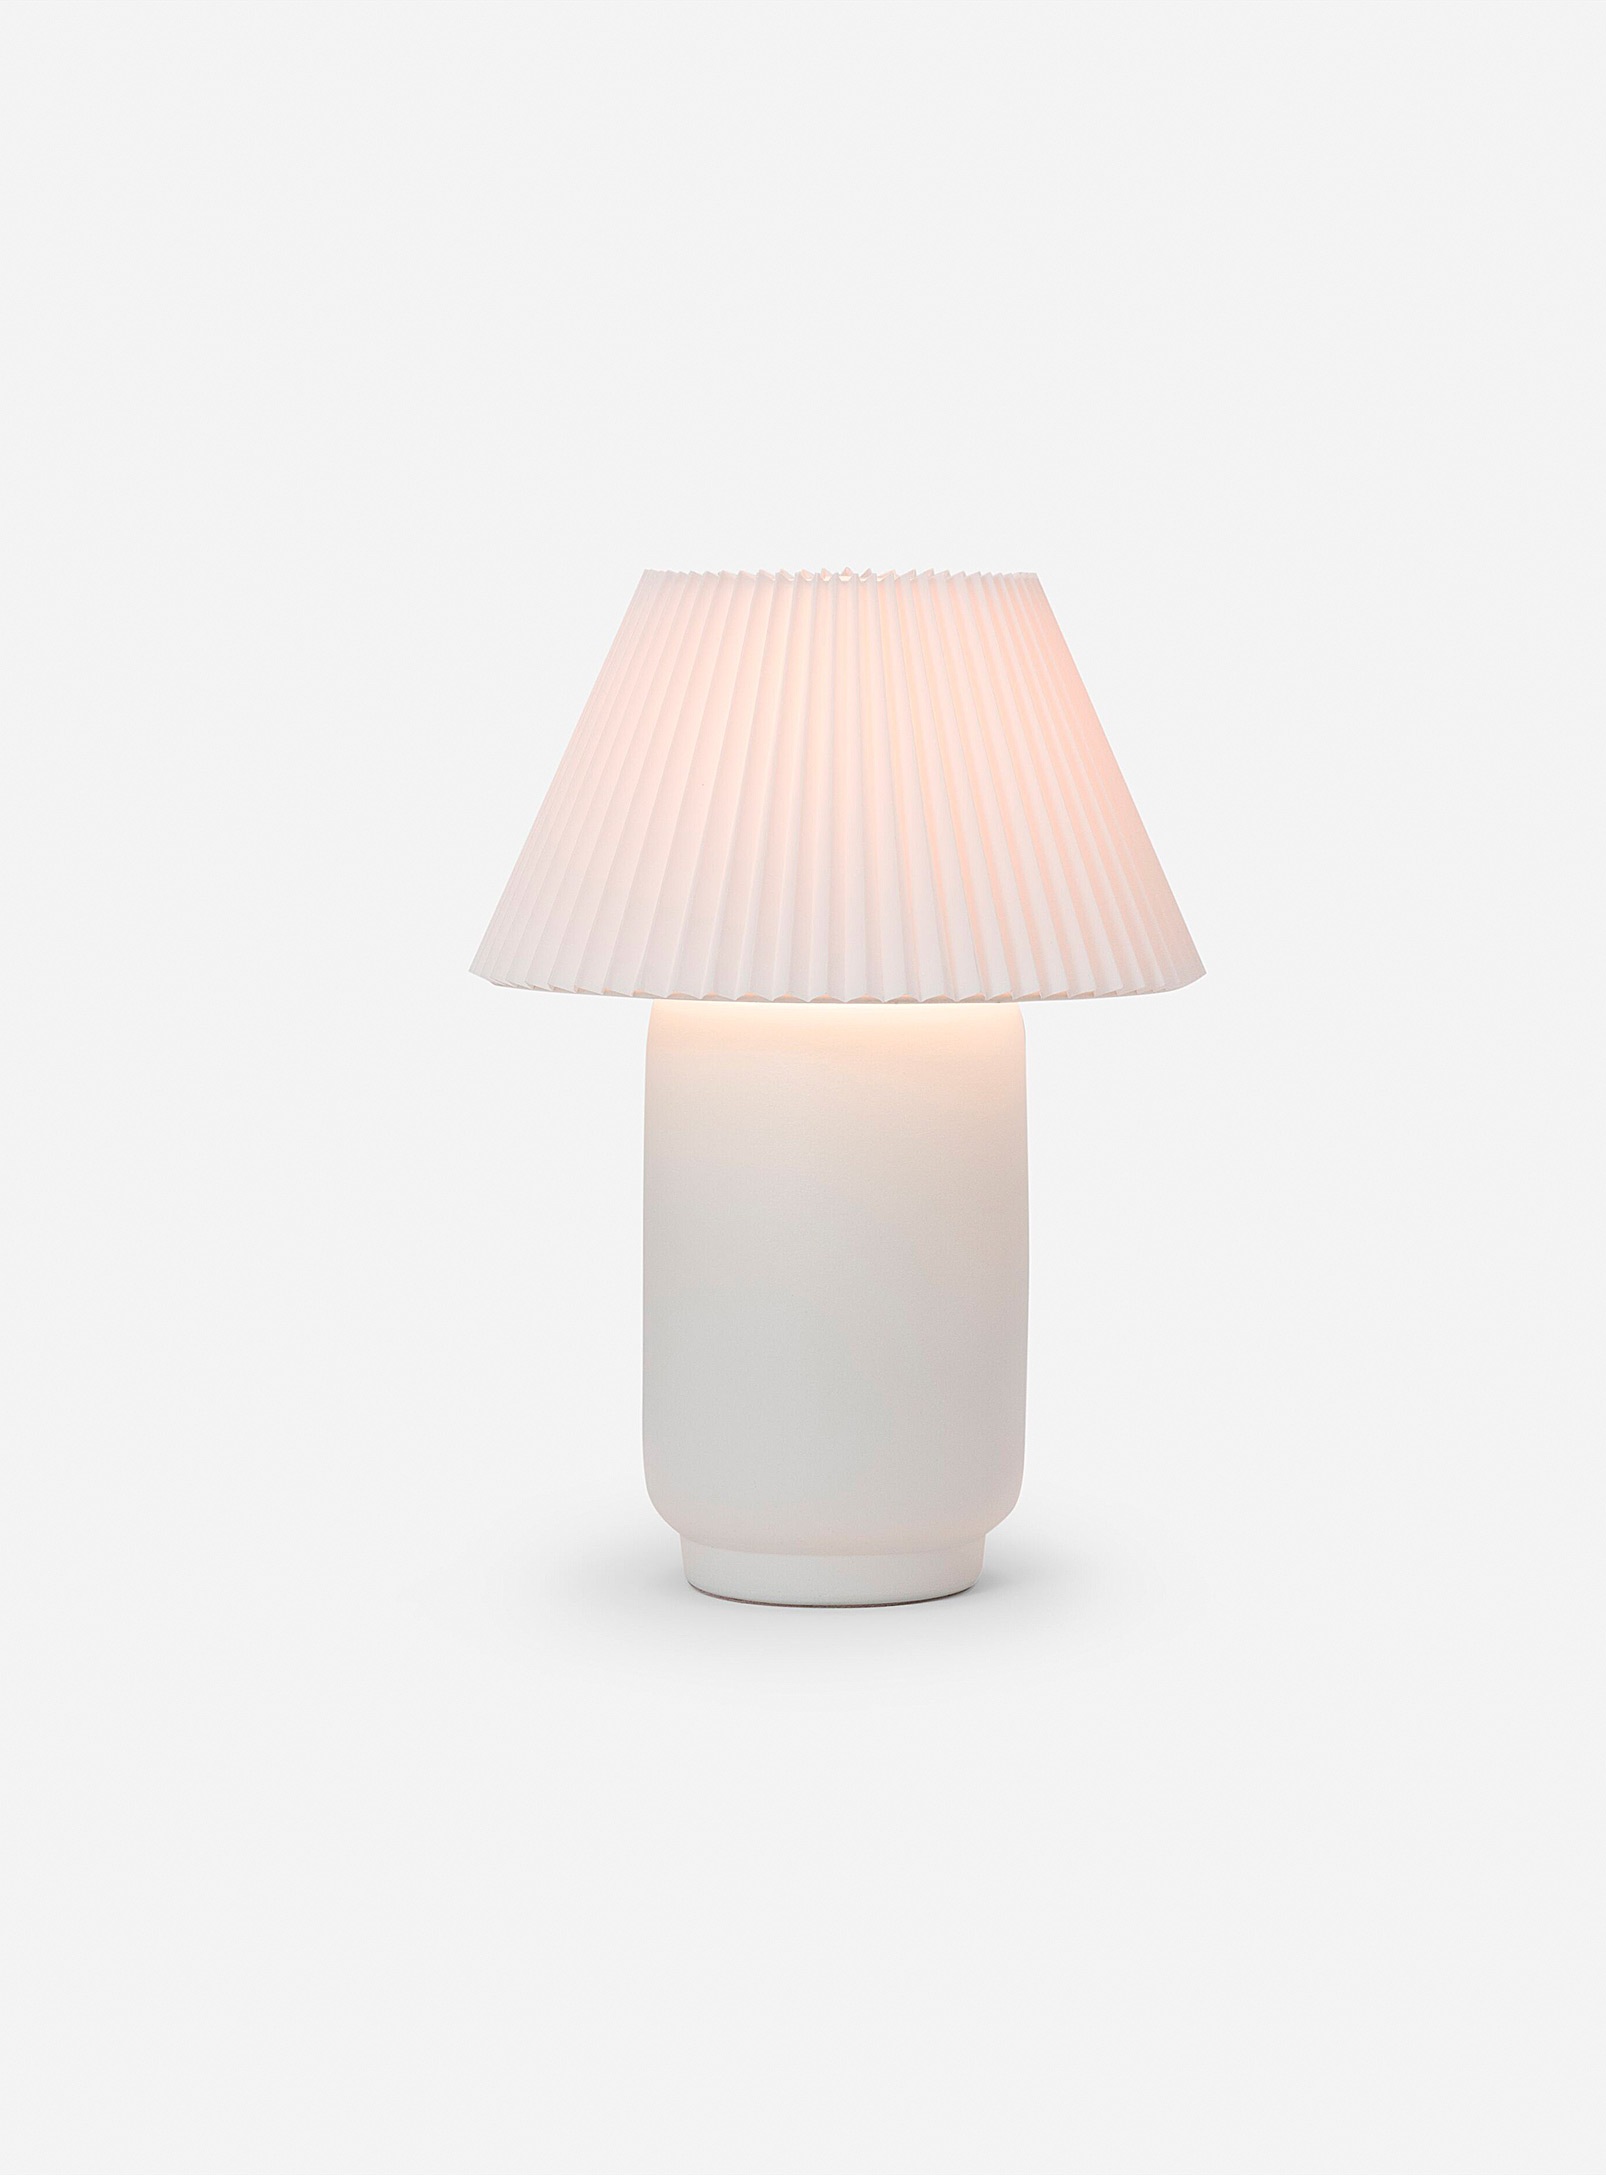 Eq3 Retro Pleat Table Lamp In White